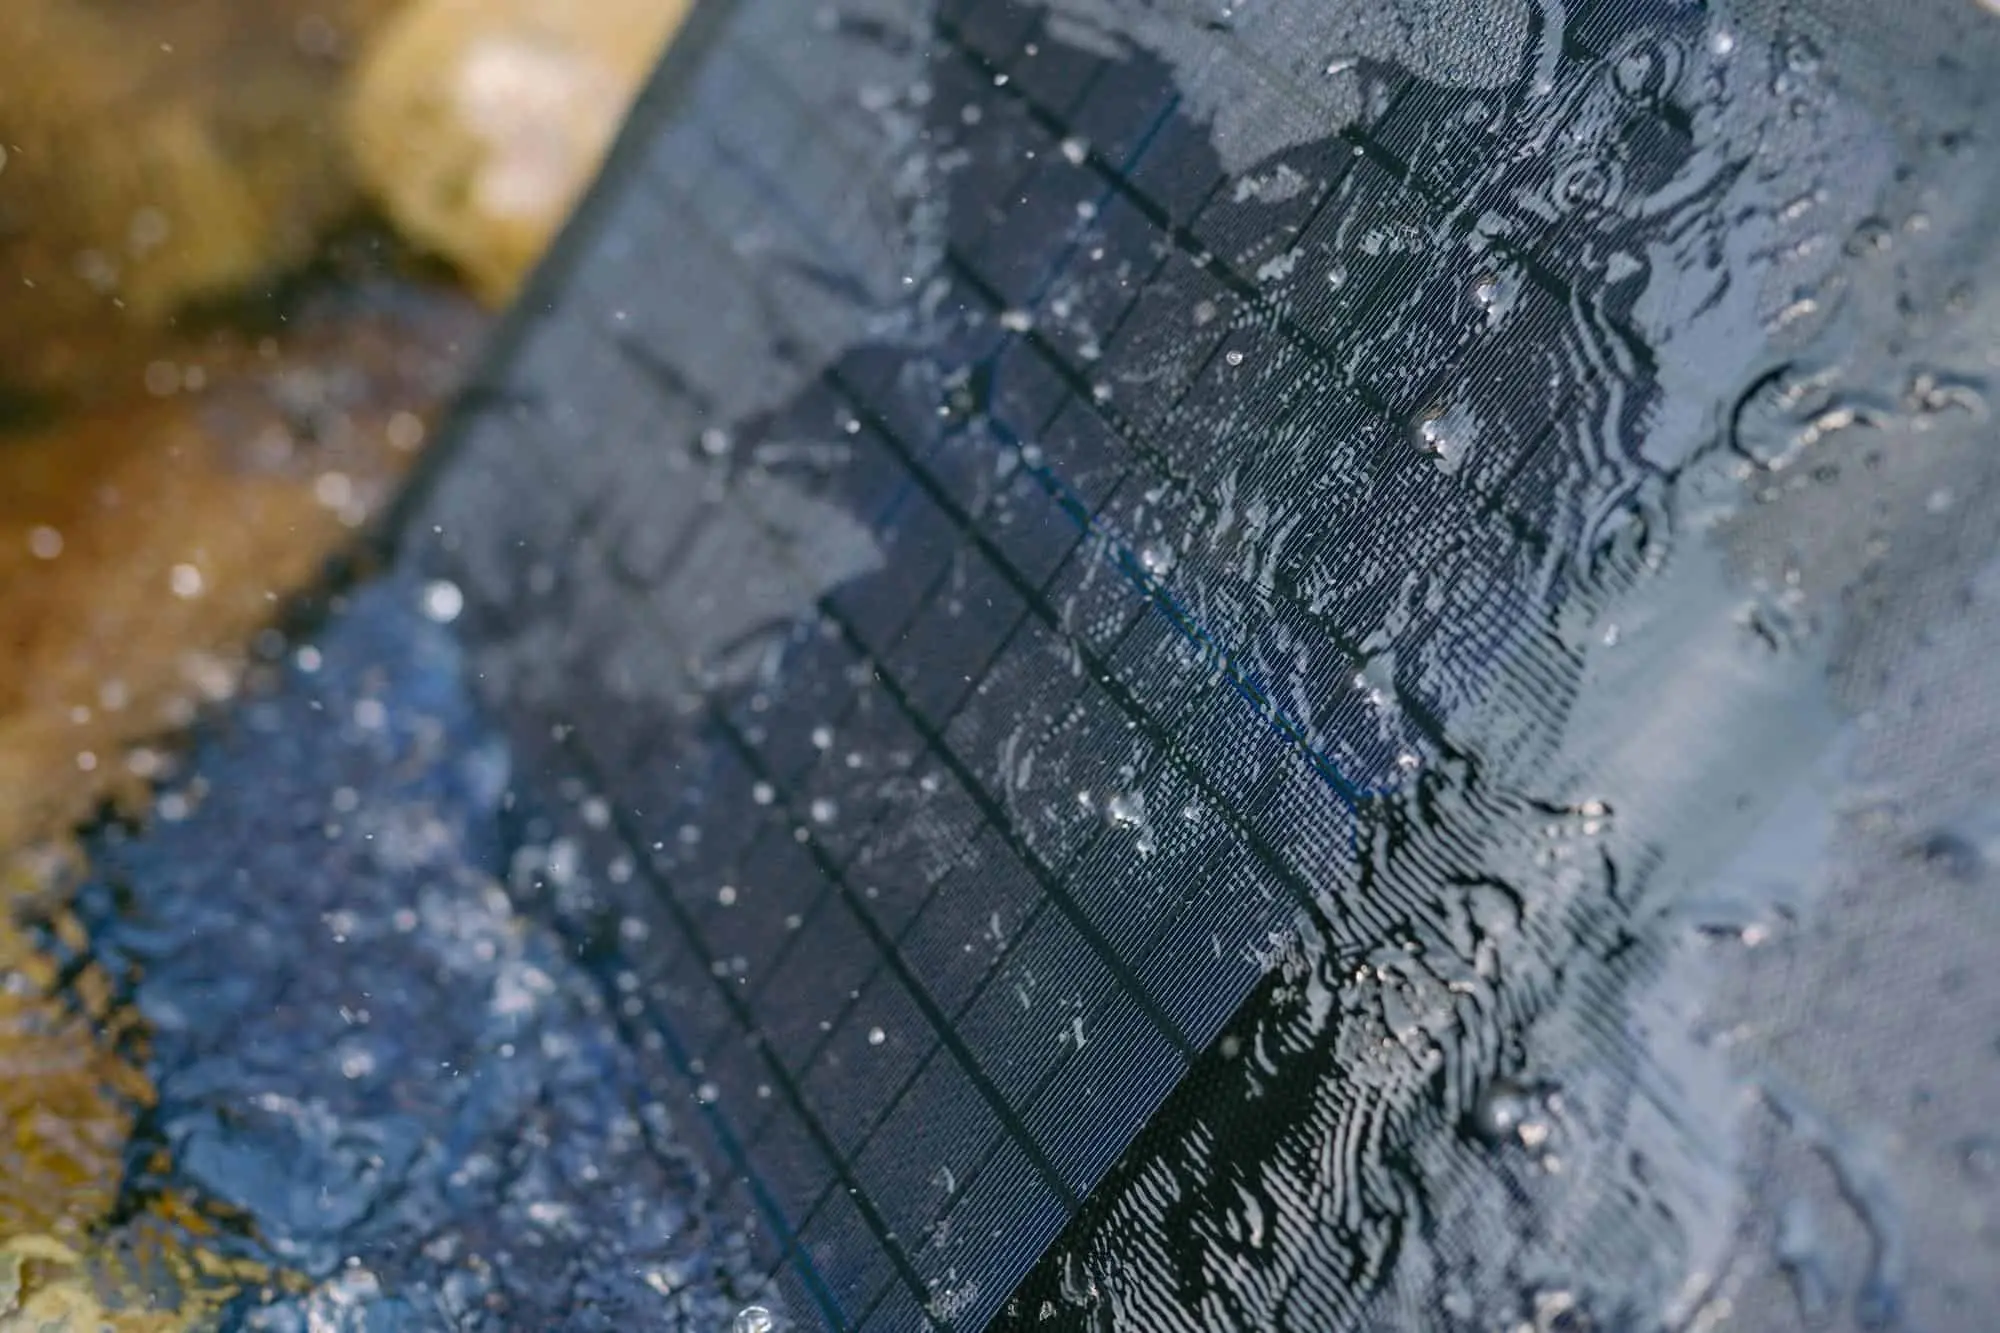 solar panels hail - Are flexible solar panels hail proof